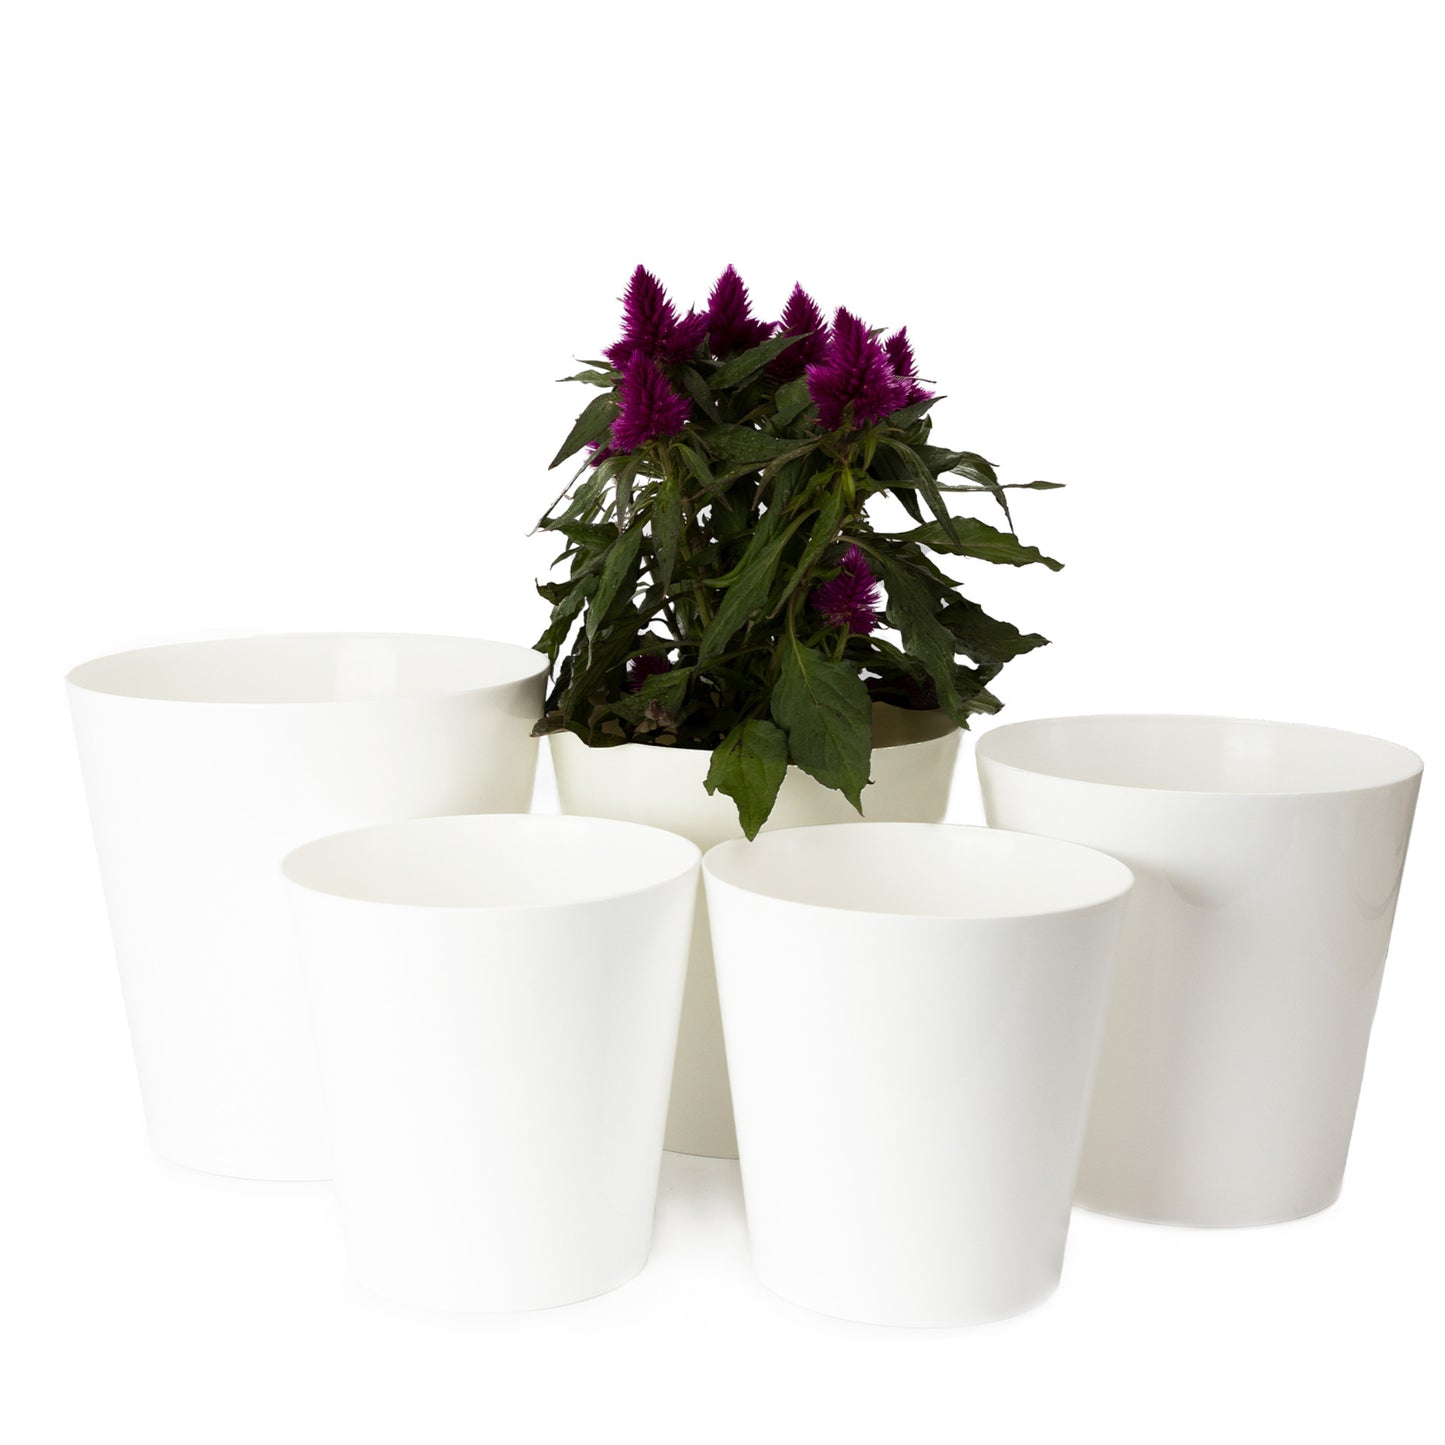 Plant Pots Indoor Aga Set of 5 Sizes 13/13/15/15/17cm